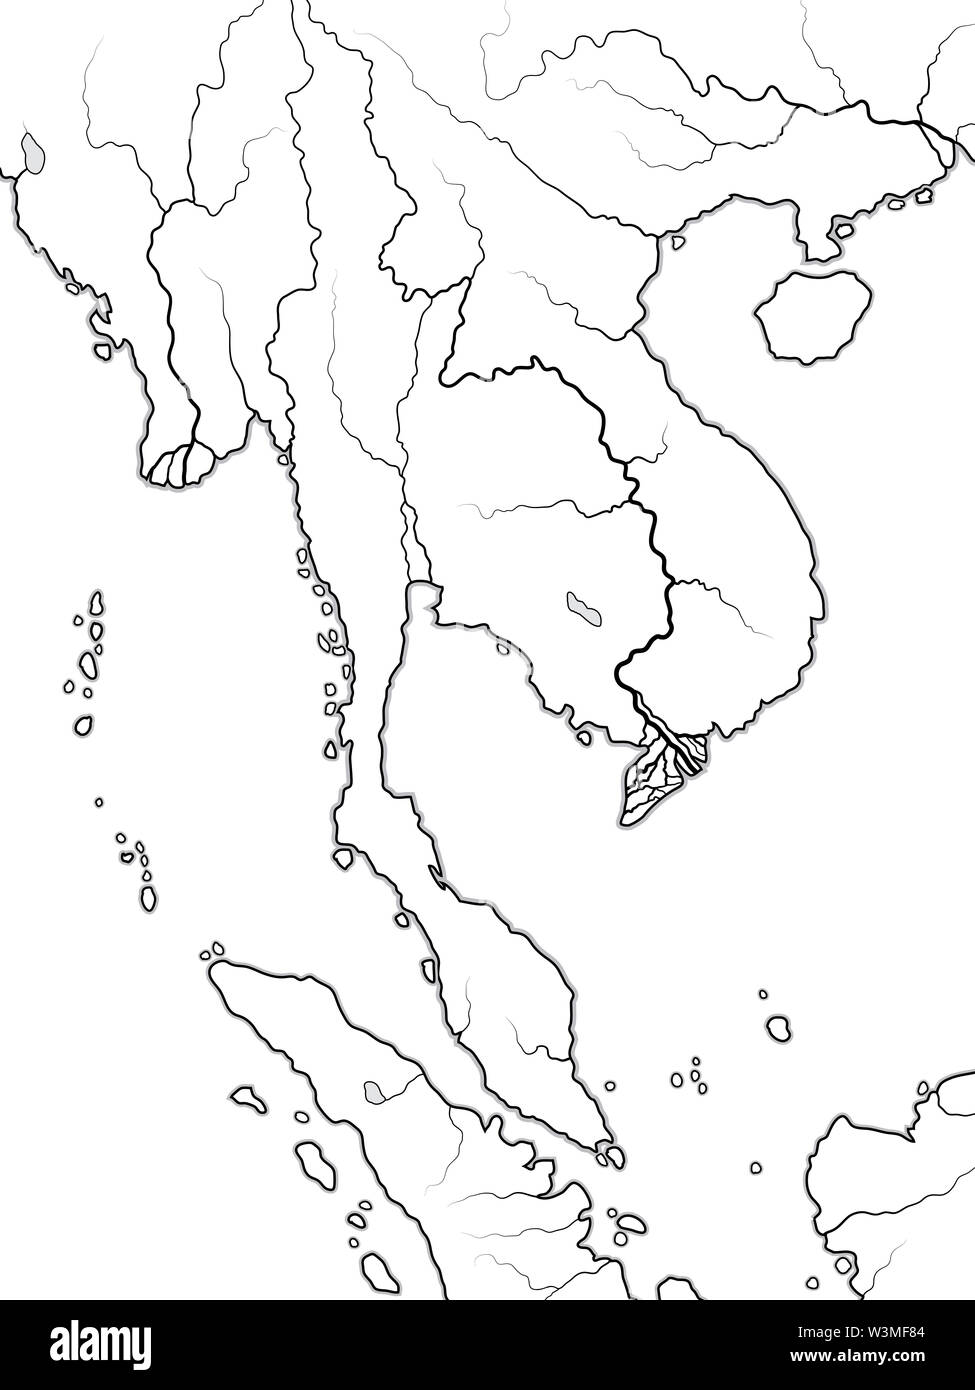 World Map of INDOCHINA: South Asia, Indochinese Peninsula, Thailand, Siam, Vietnam, Laos, Cambodja, Singapore, Malaysia, Malacca, Burma, Myanmar. Stock Photo